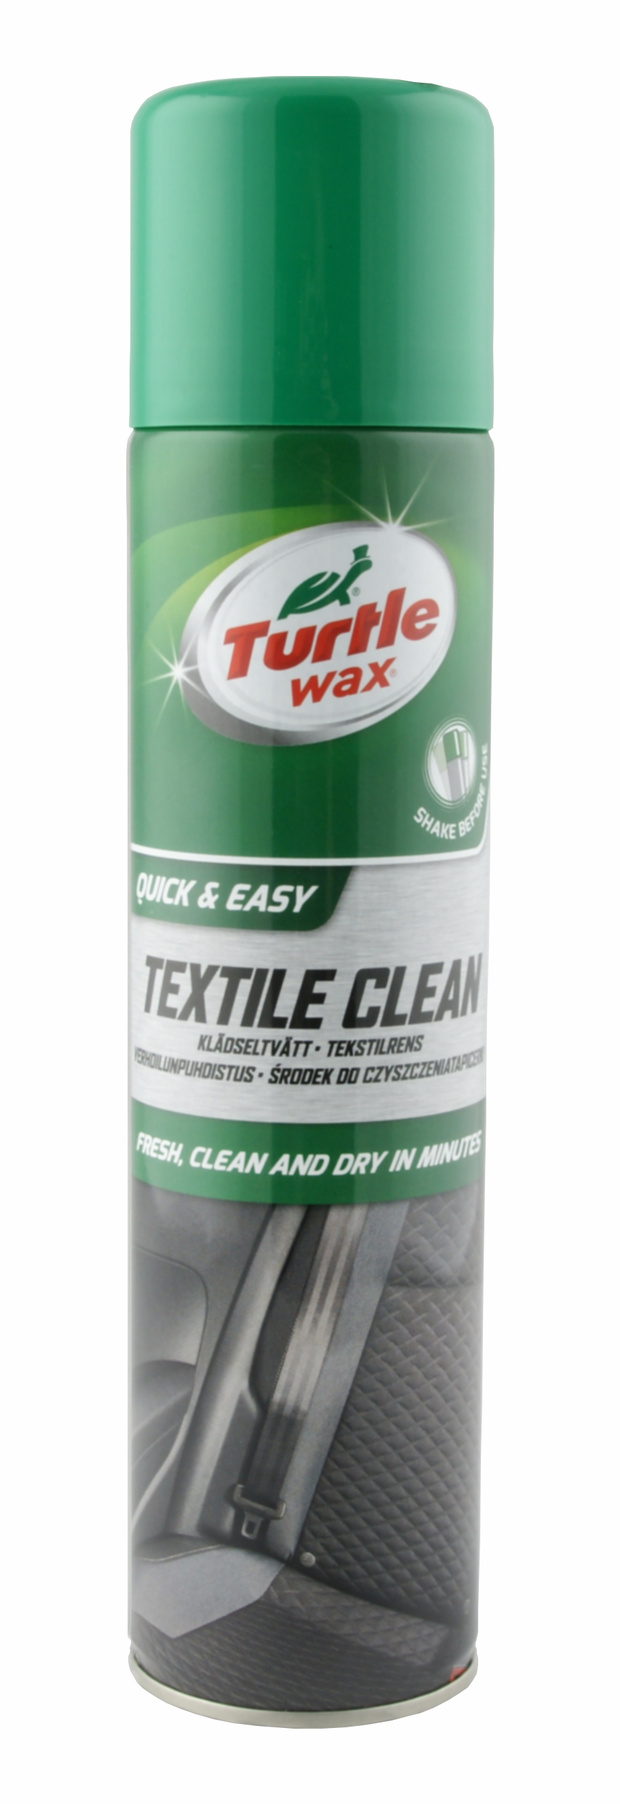 Klädseltvätt Textile Clean 300 ml